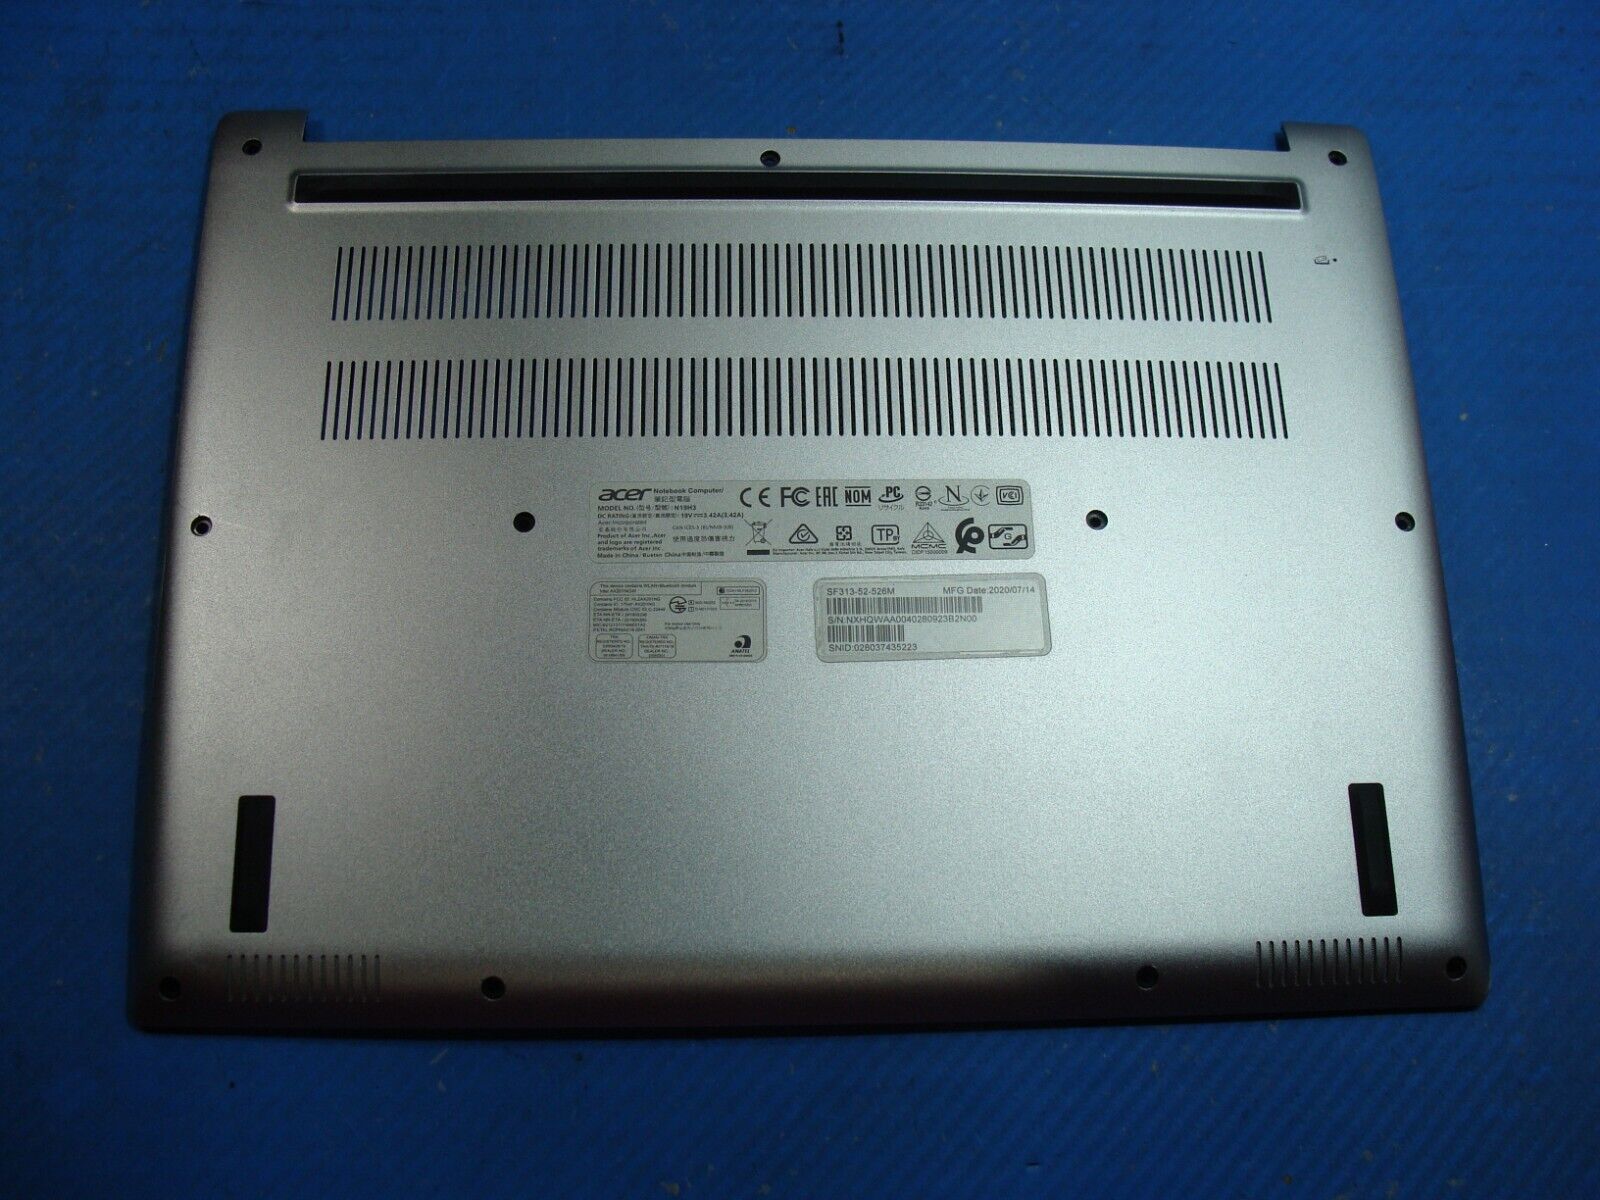 Acer Swift 3 13.5 N19H3 SF313-52-526M OEM Laptop Bottom Case NC210110WM Grade A